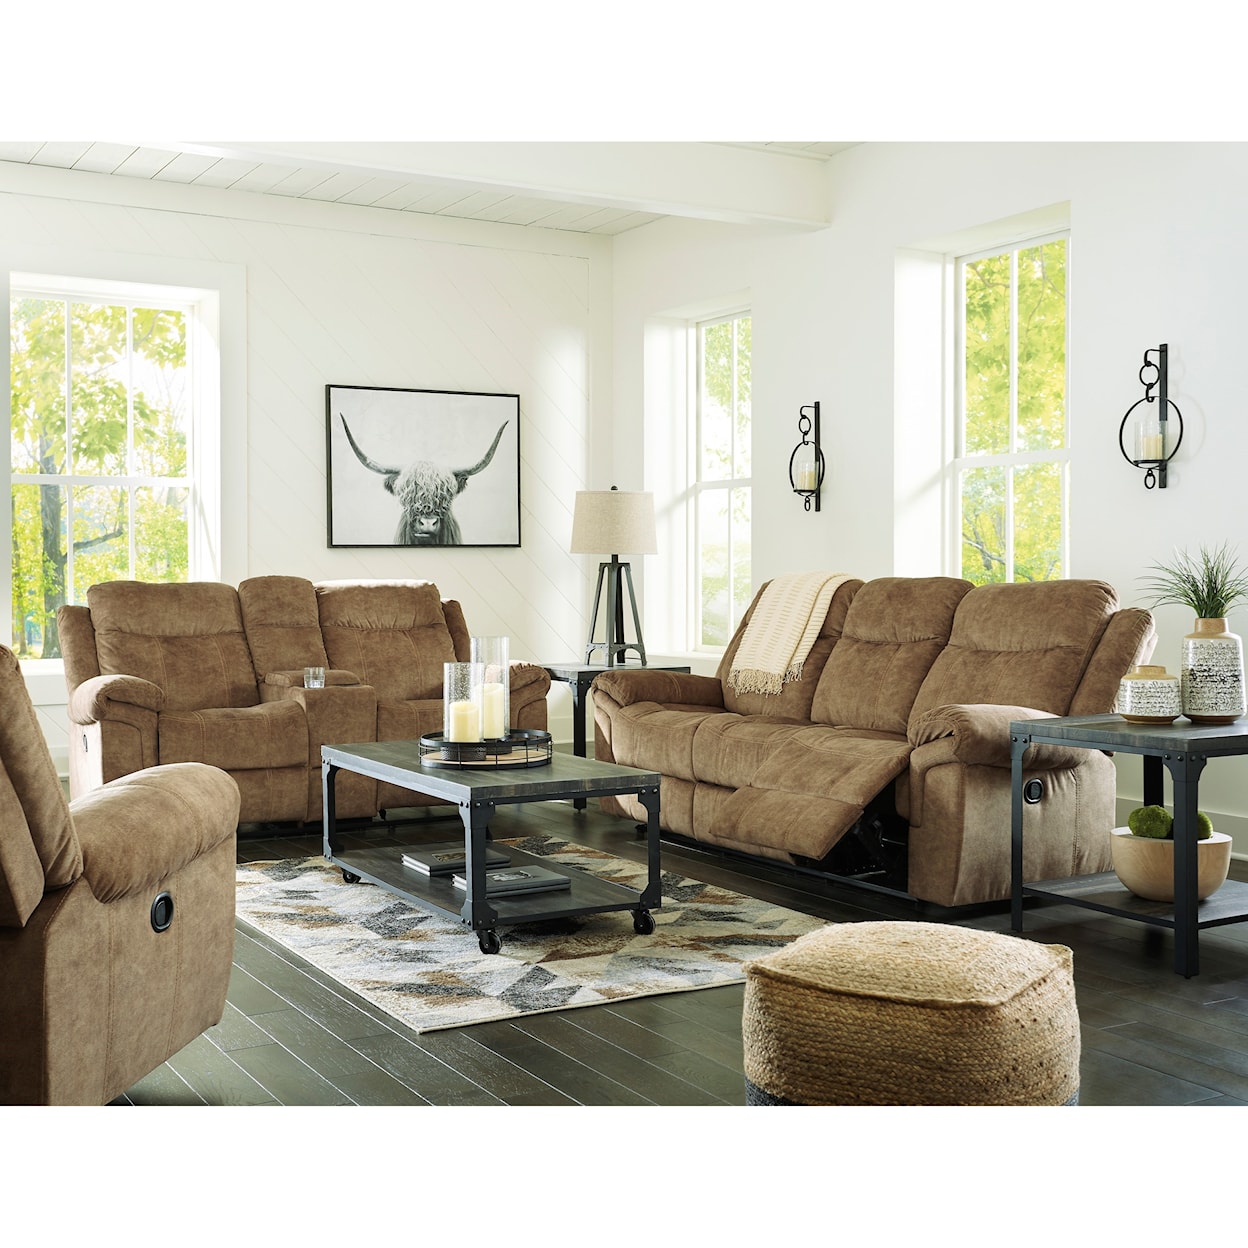 Ashley Furniture Signature Design Huddle-Up Reclining Living Room Group